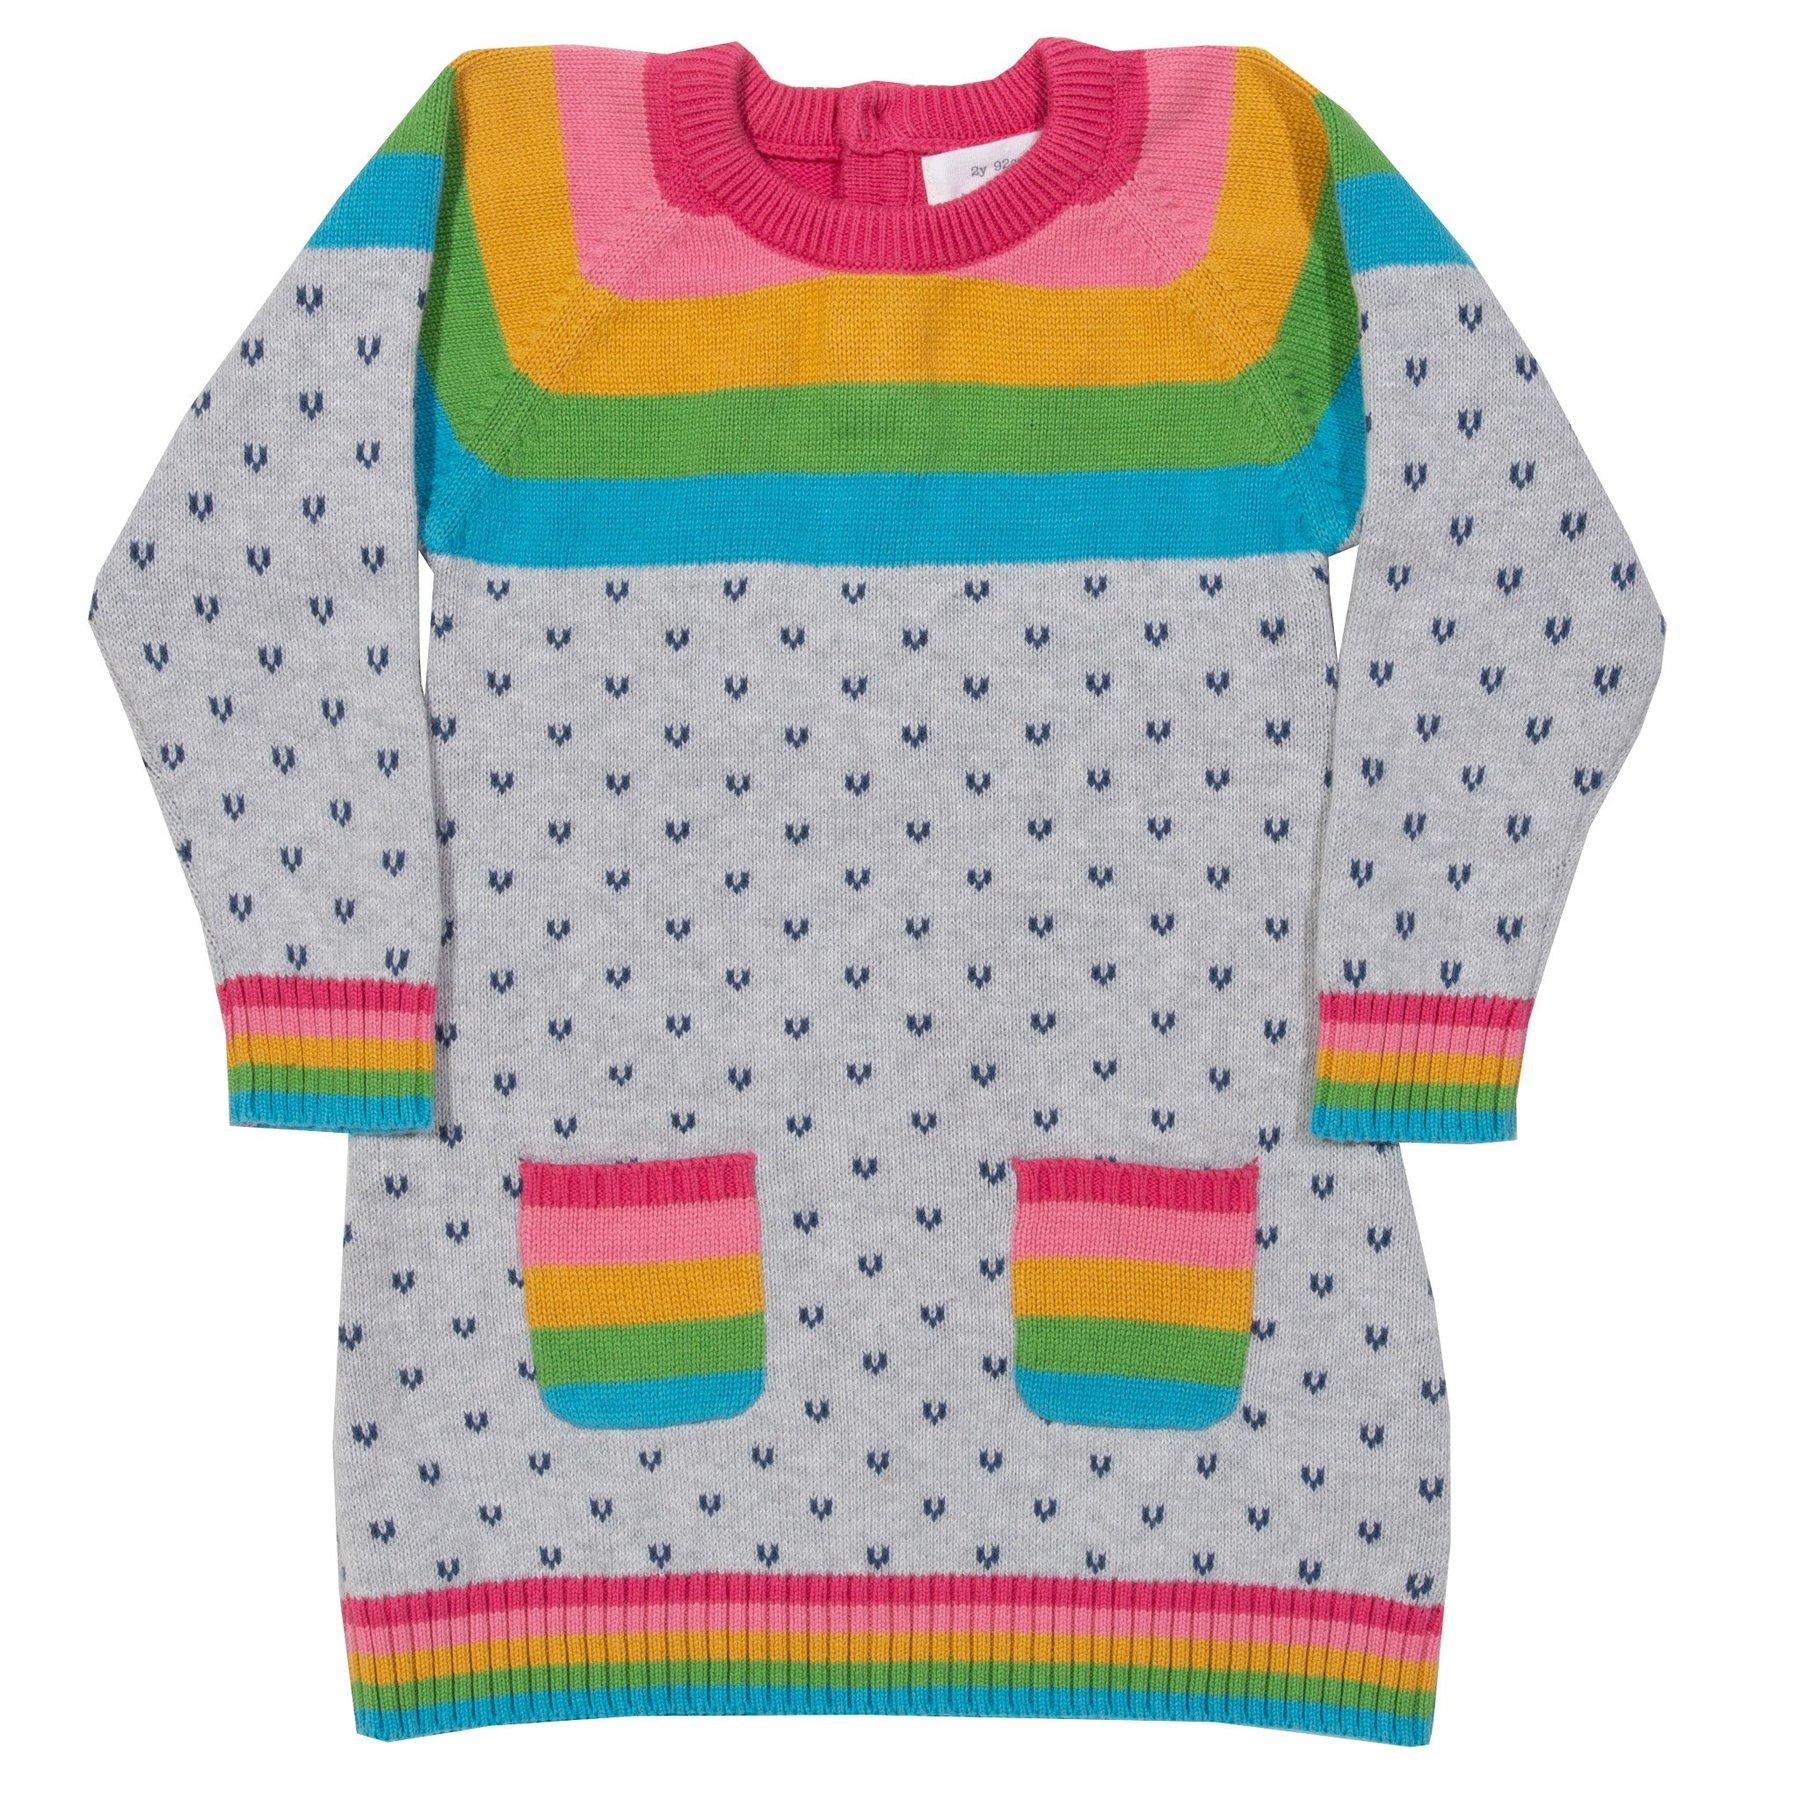 Kite Clothing Rainbow Knit Dress front